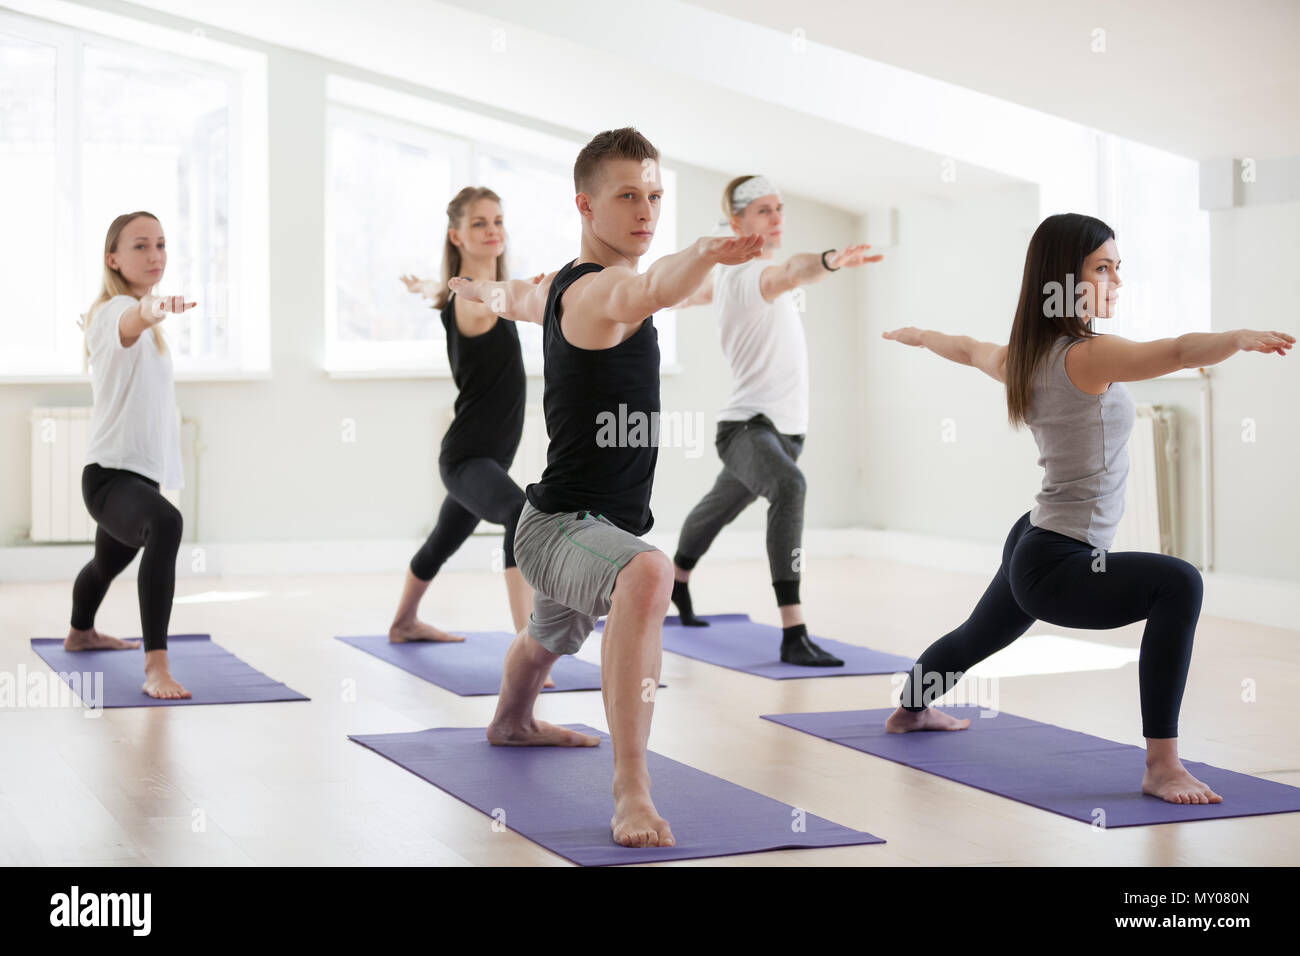 5 Benefits of Partner Yoga | ACAC Fitness & Wellness